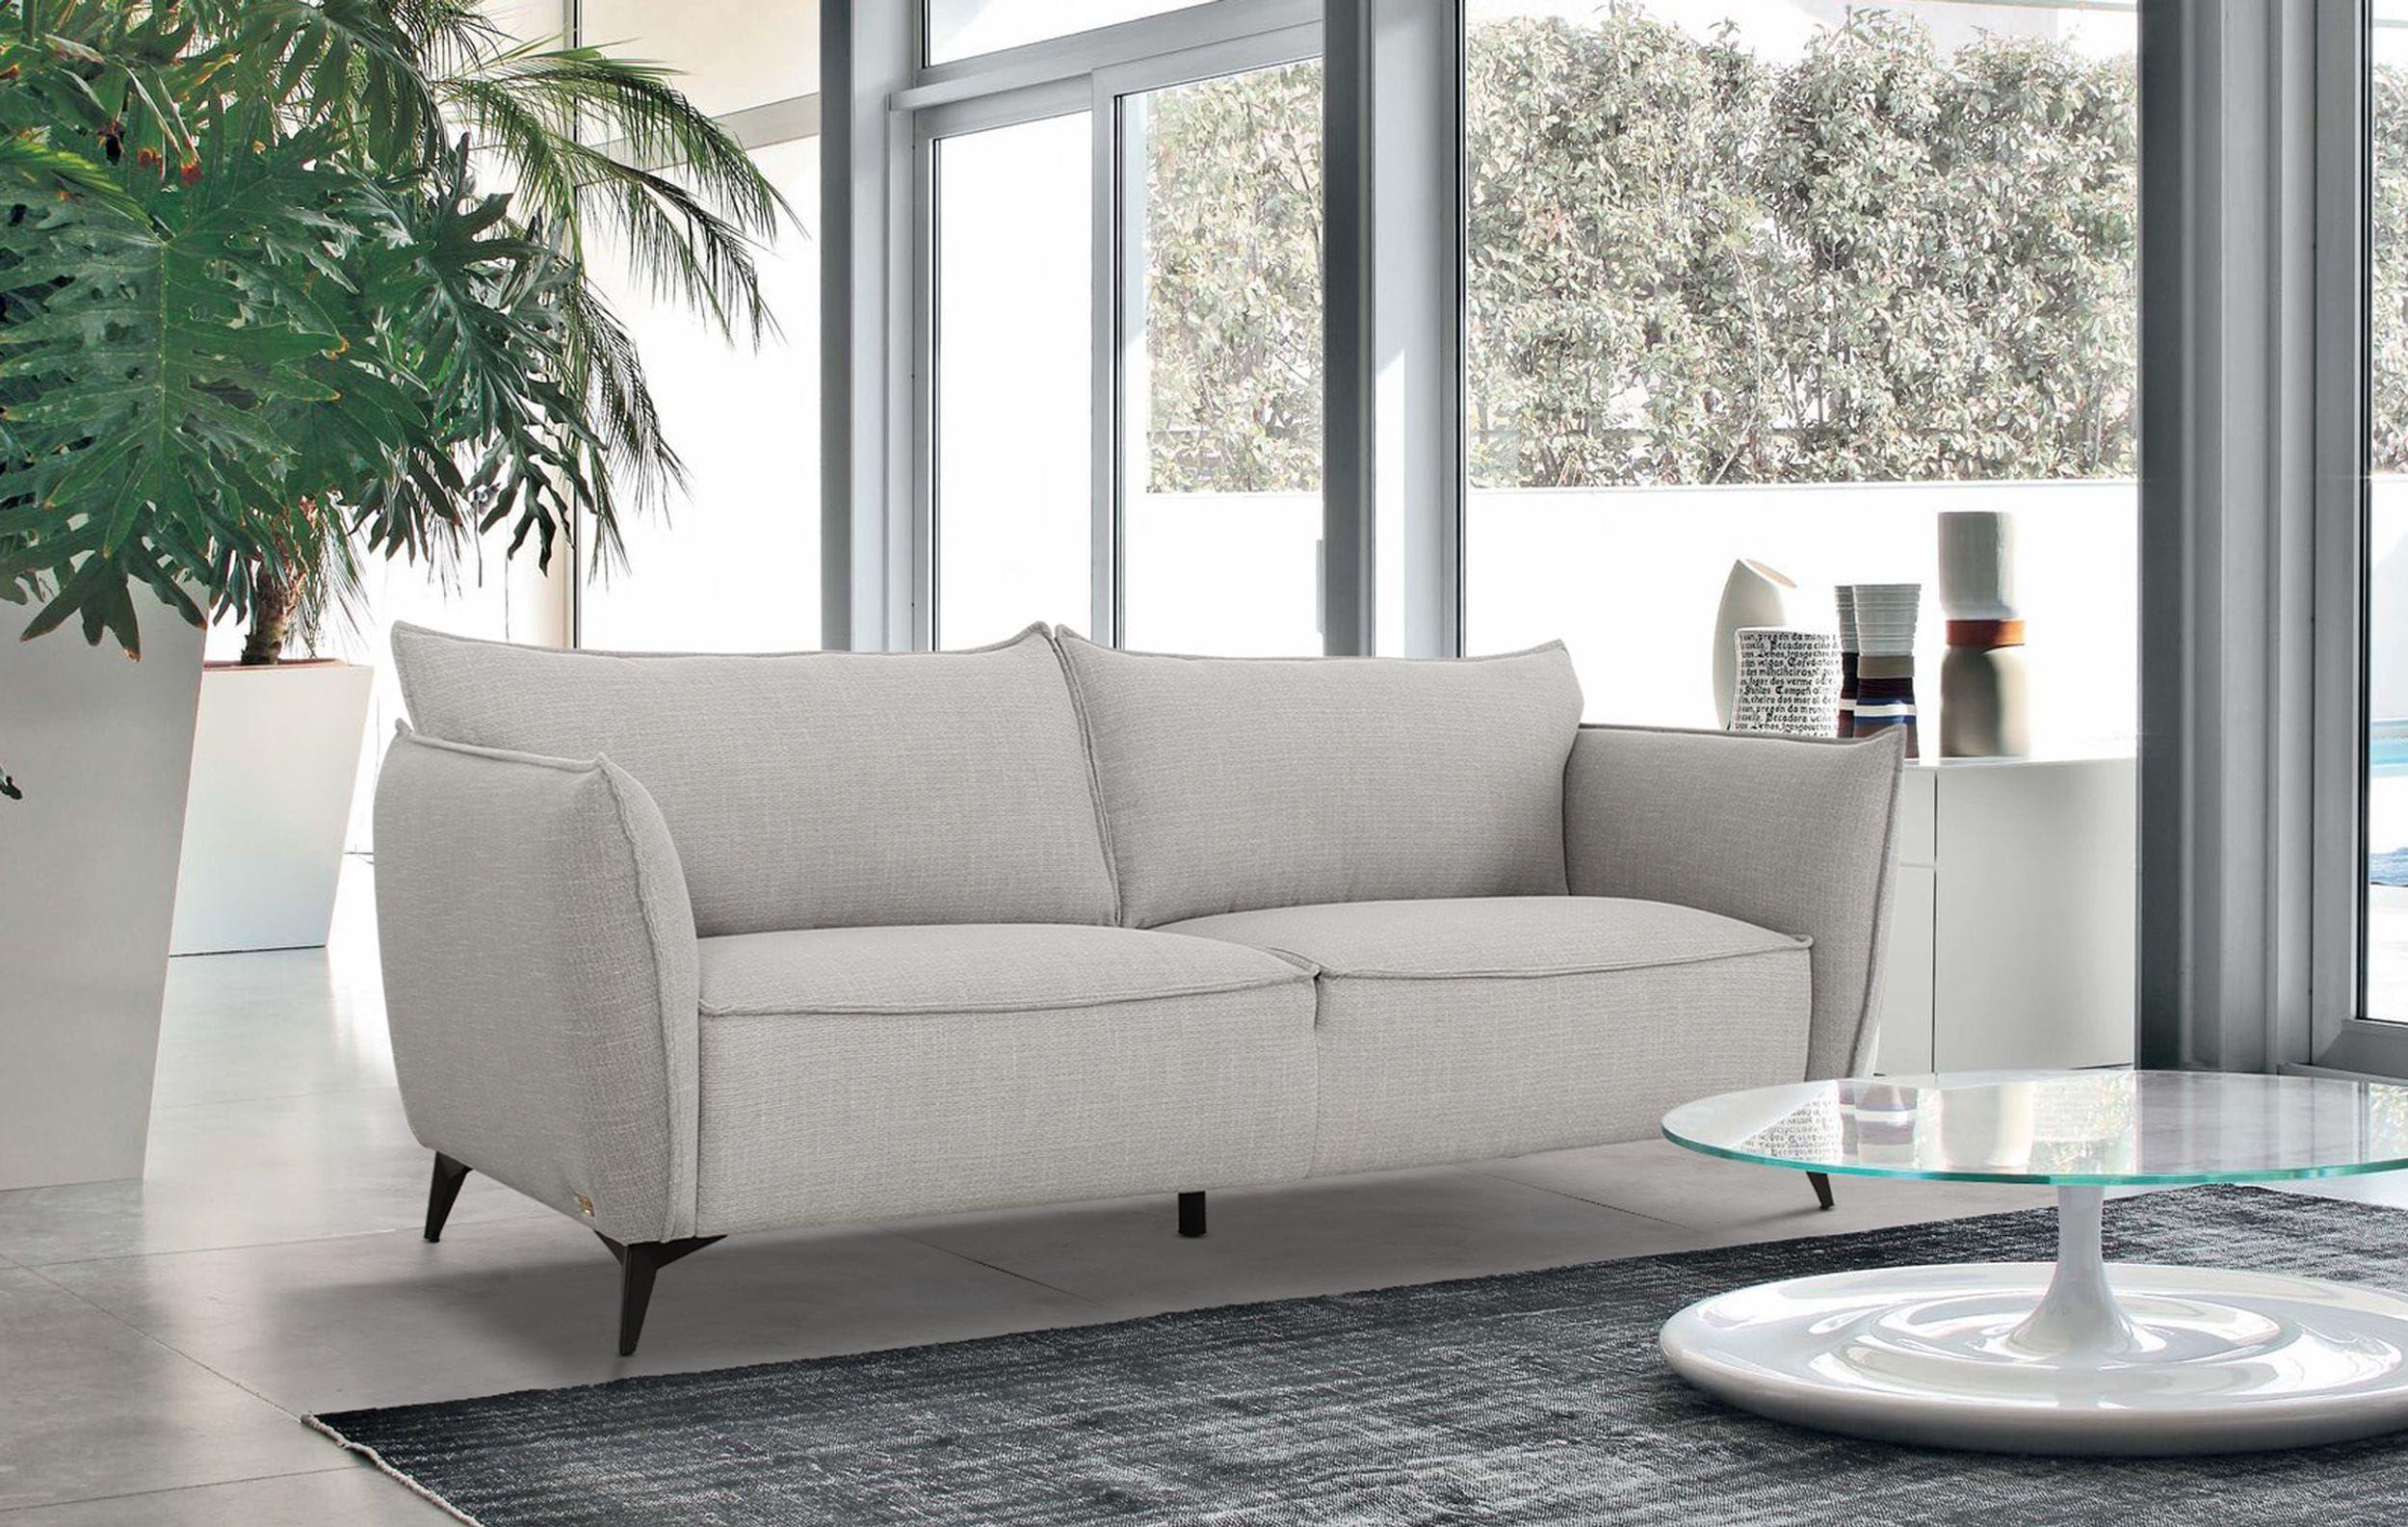 Contemporary, Modern Sofa VGKNK8548-GRY2-S VGKNK8548-GRY2-S in Light Grey Fabric